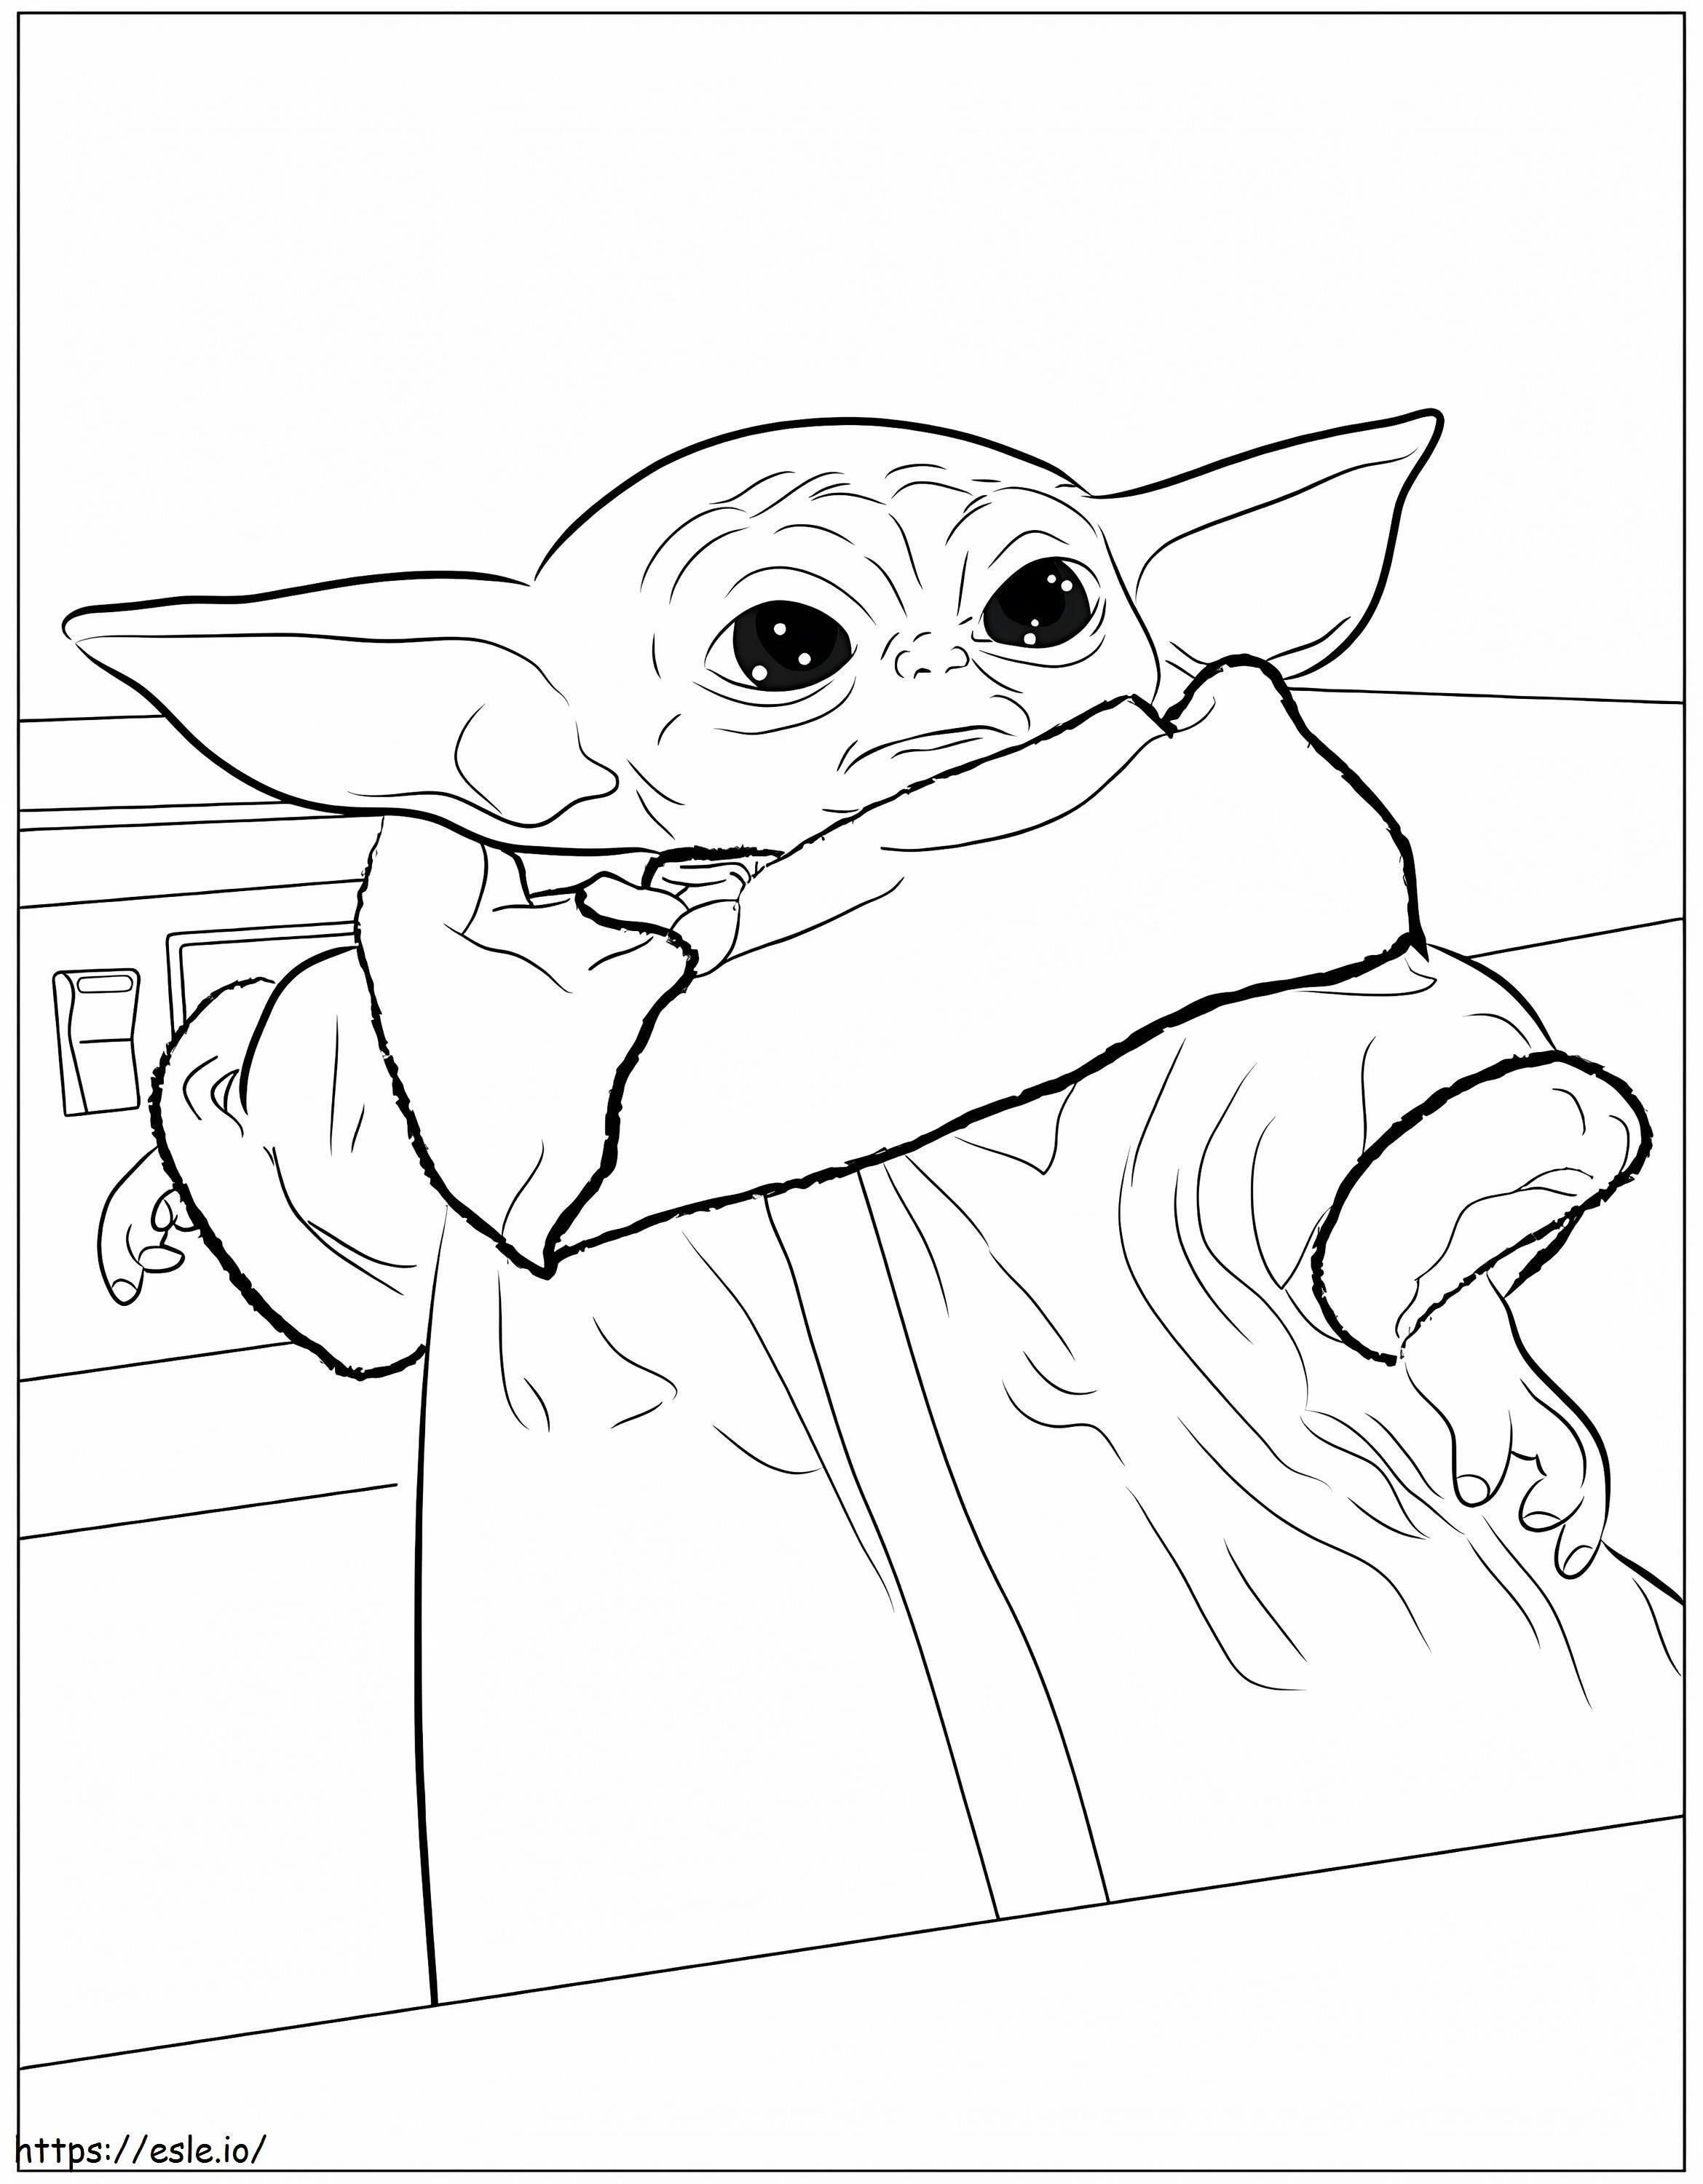 Printable Baby Yoda coloring page